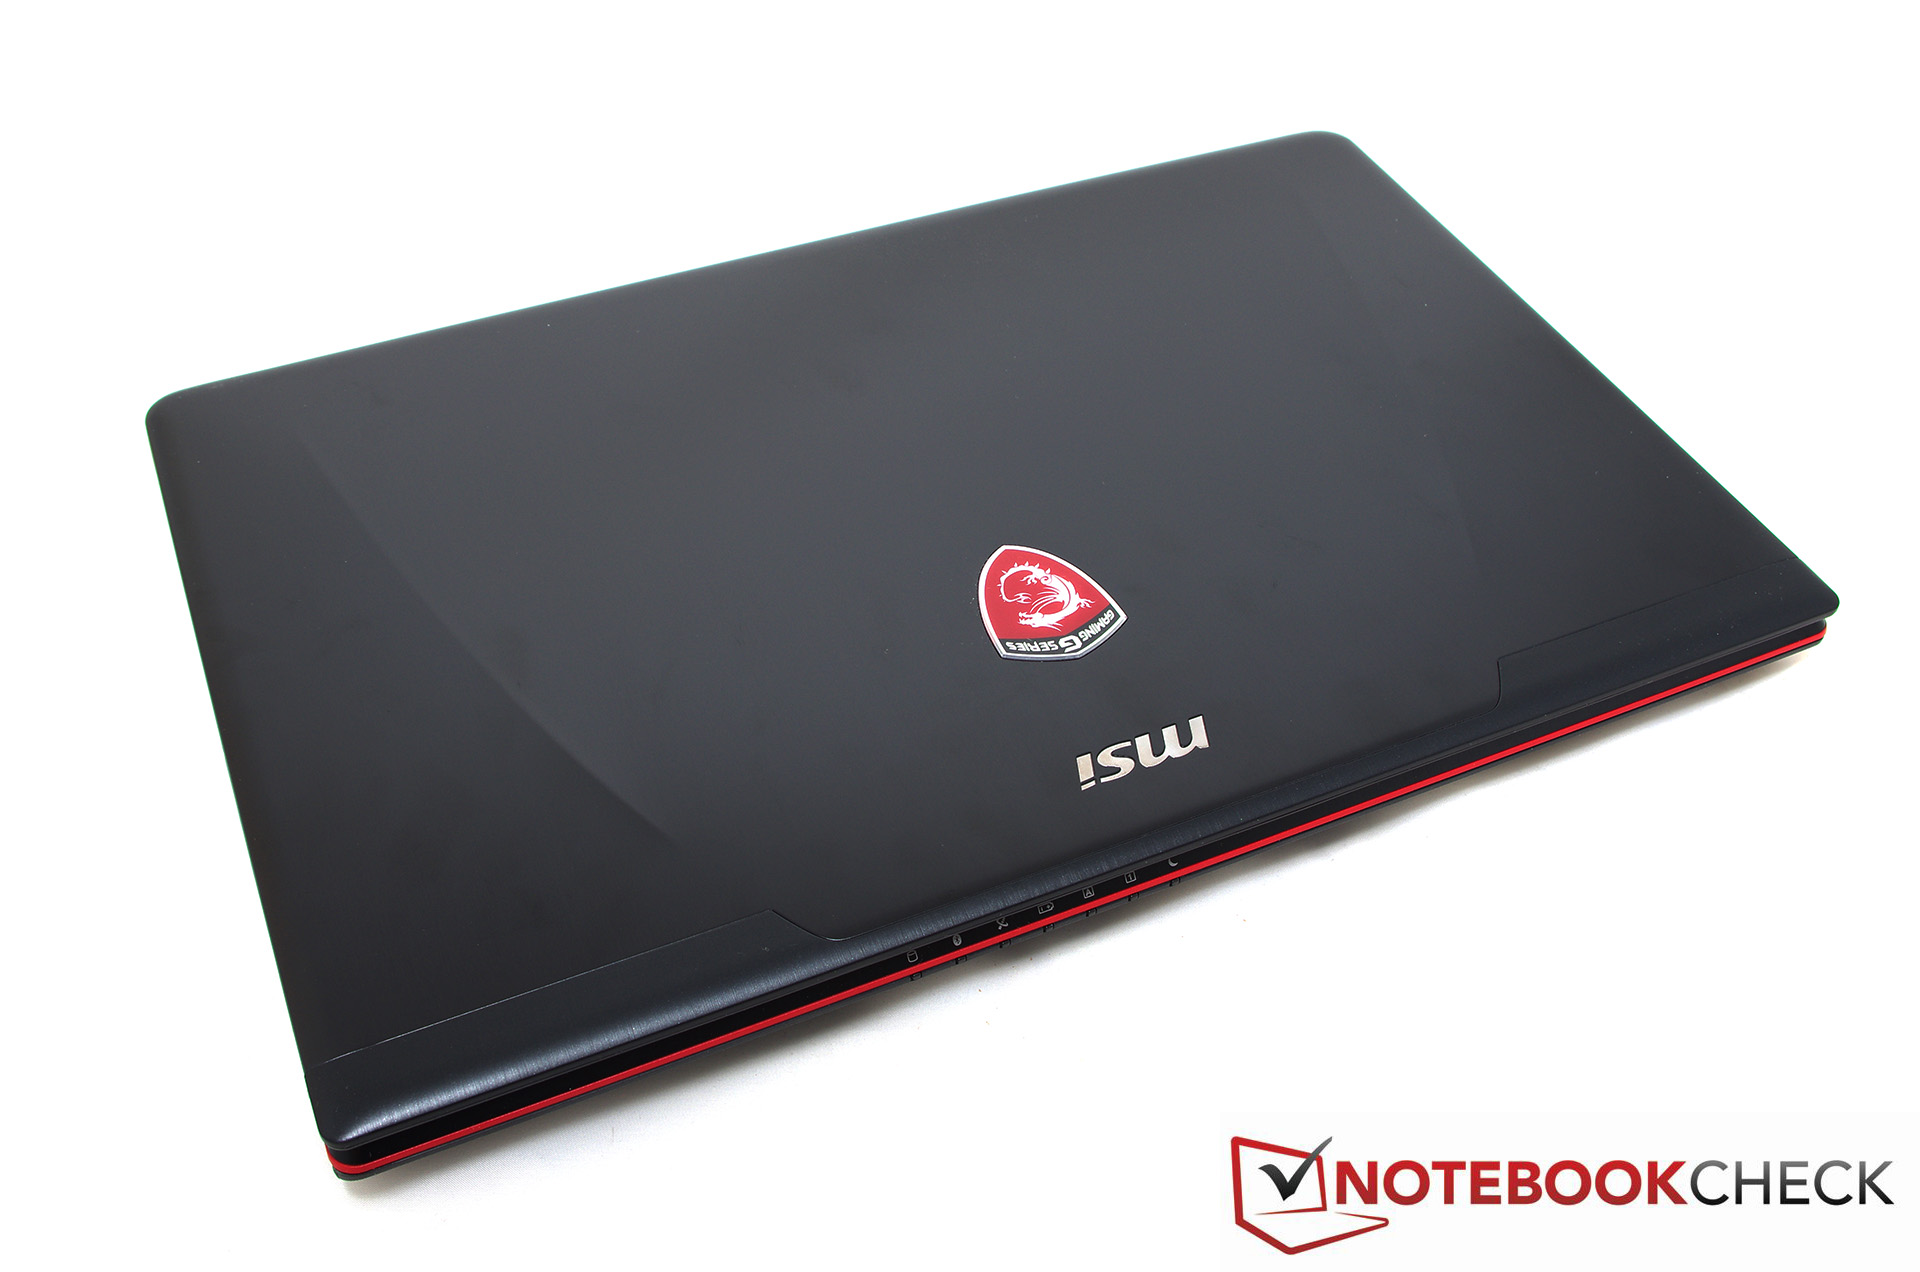 MSI GE60 (GTX 960M) Notebook Review - NotebookCheck.net Reviews